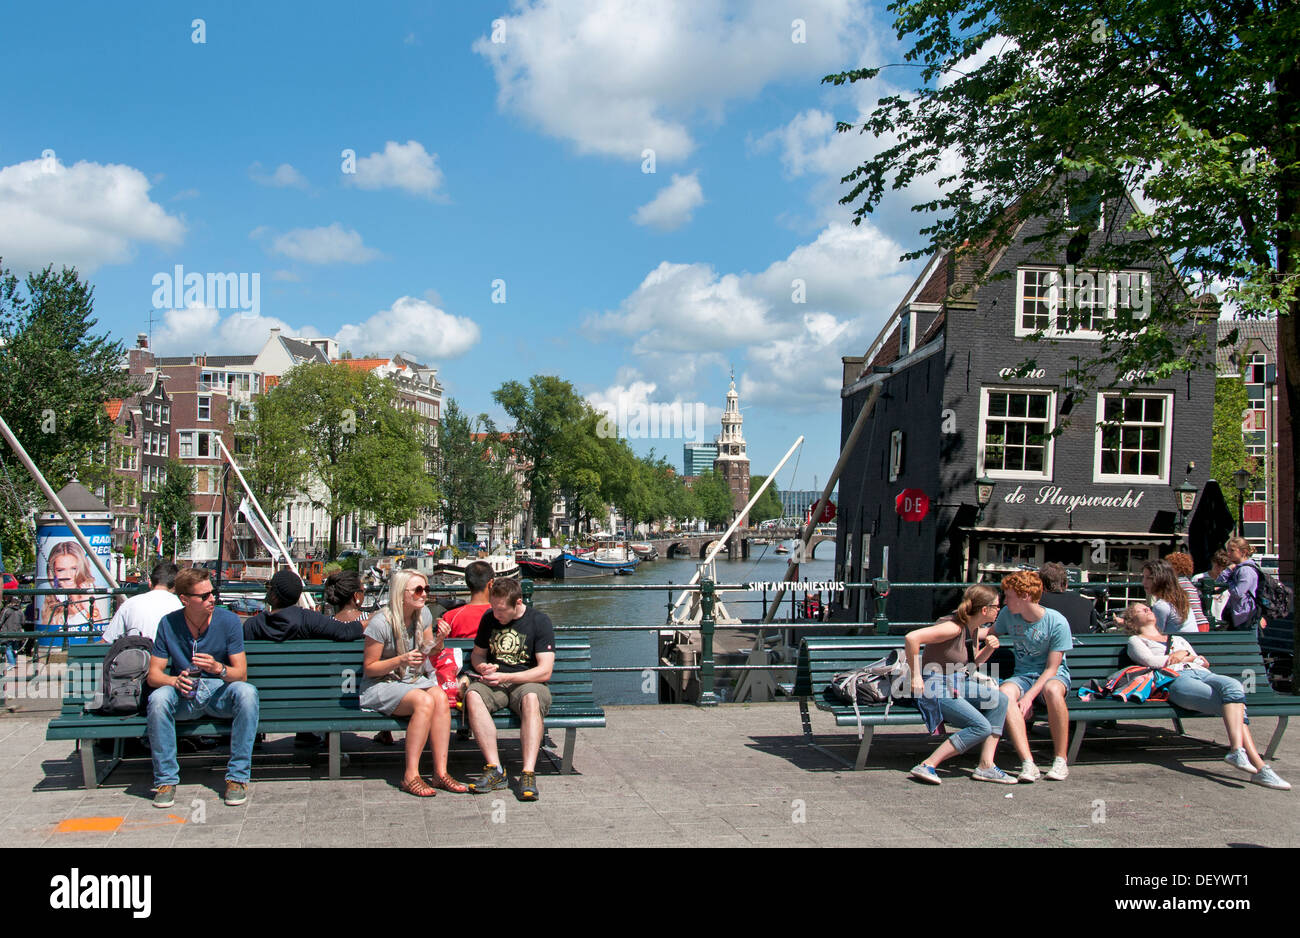 Cafe de Sluiswacht Oudeschans Amsterdam Niederlande Canal Boat House Stockfoto